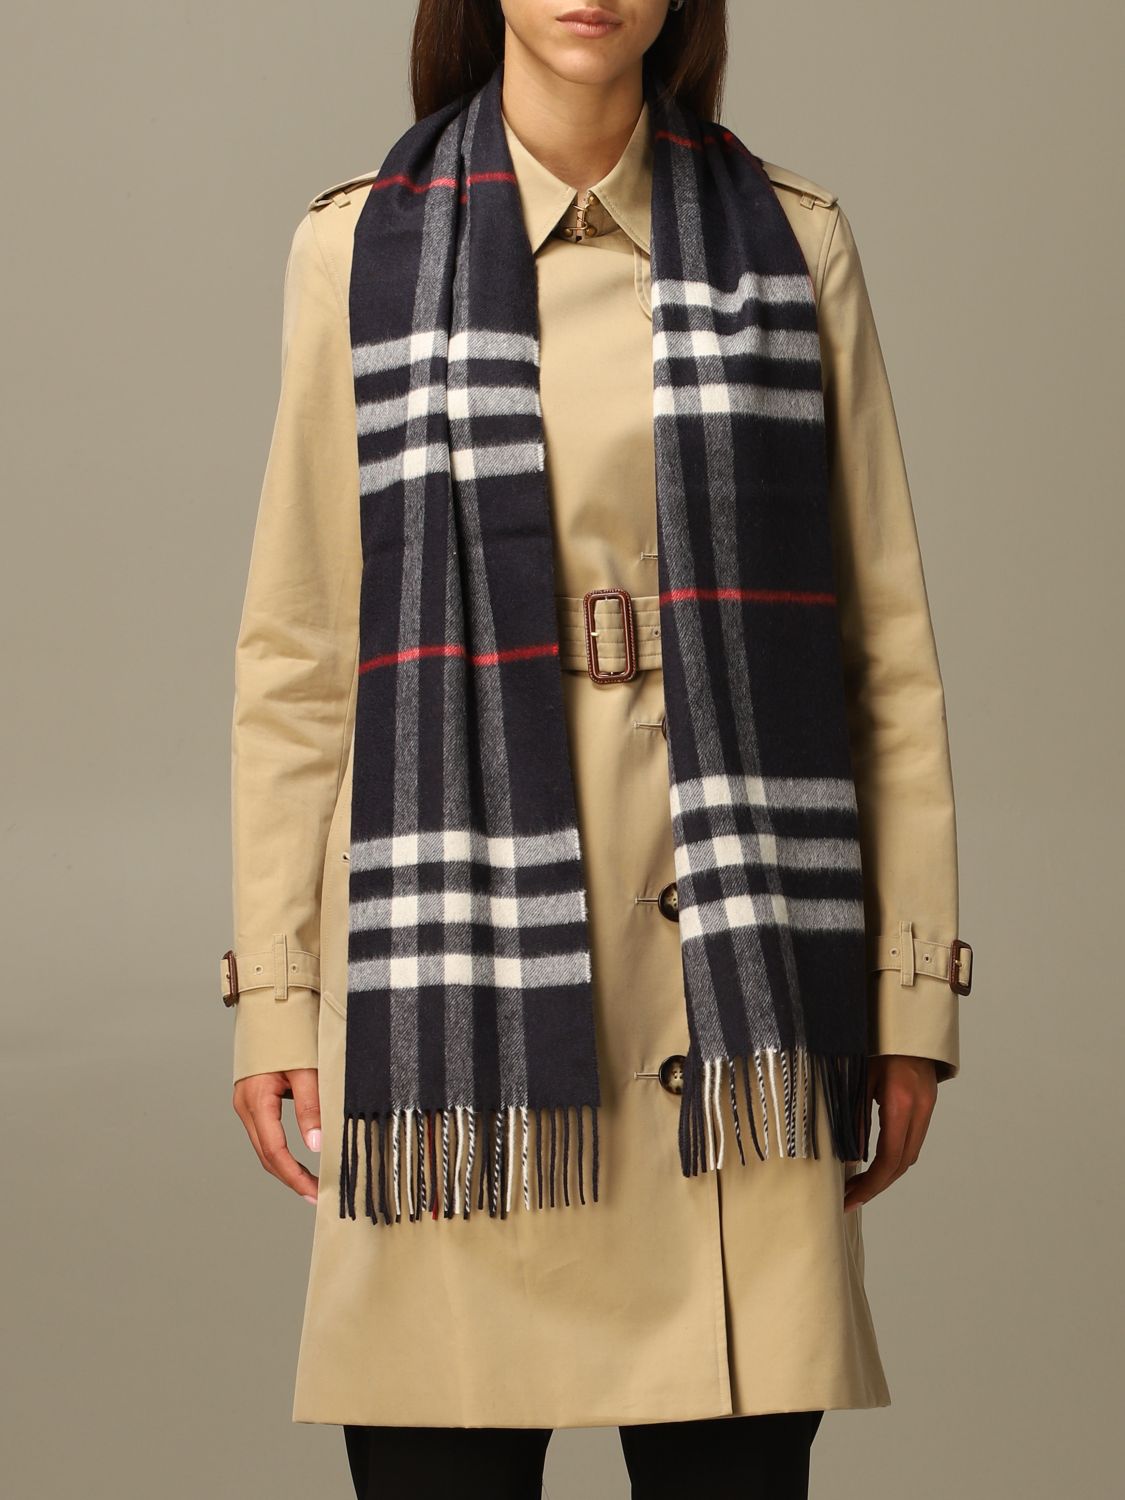 burberry scarf womens uk